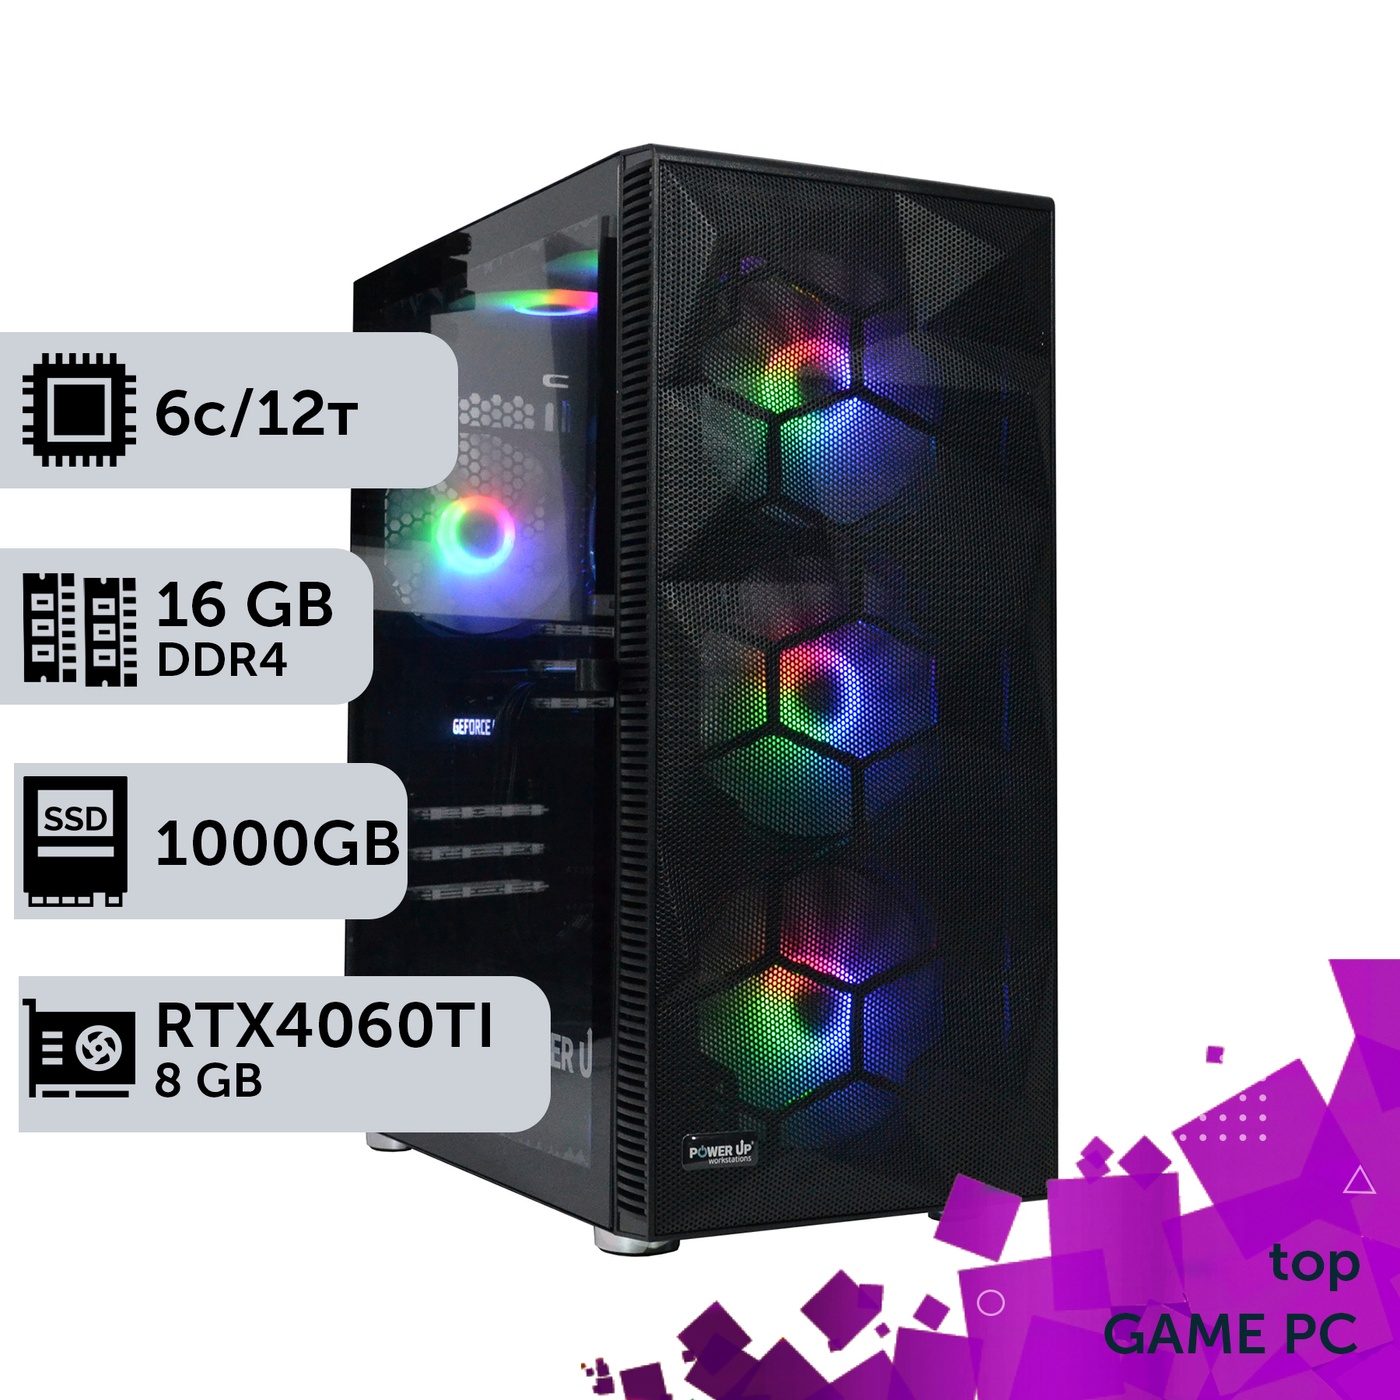 Игровой компьютер GamePC TOP #316 Core i5 10400F/16 GB/SSD 1TB/GeForce RTX 4060Ti 8GB